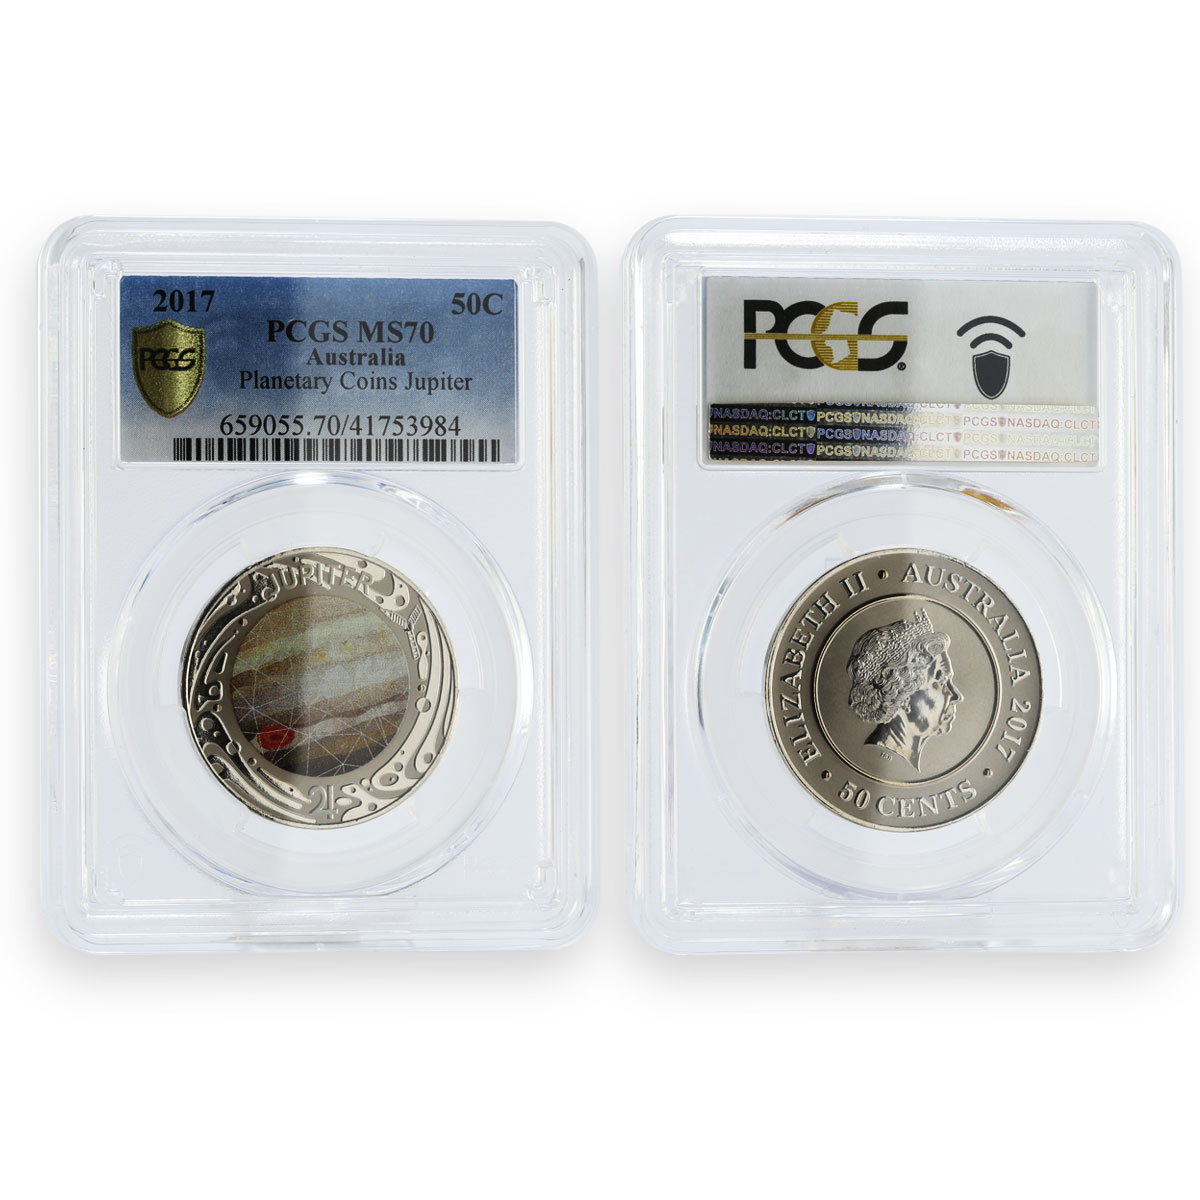 Australia set of 10 coins Planetary Coins MS69 PCGS aluminuim coins 2017